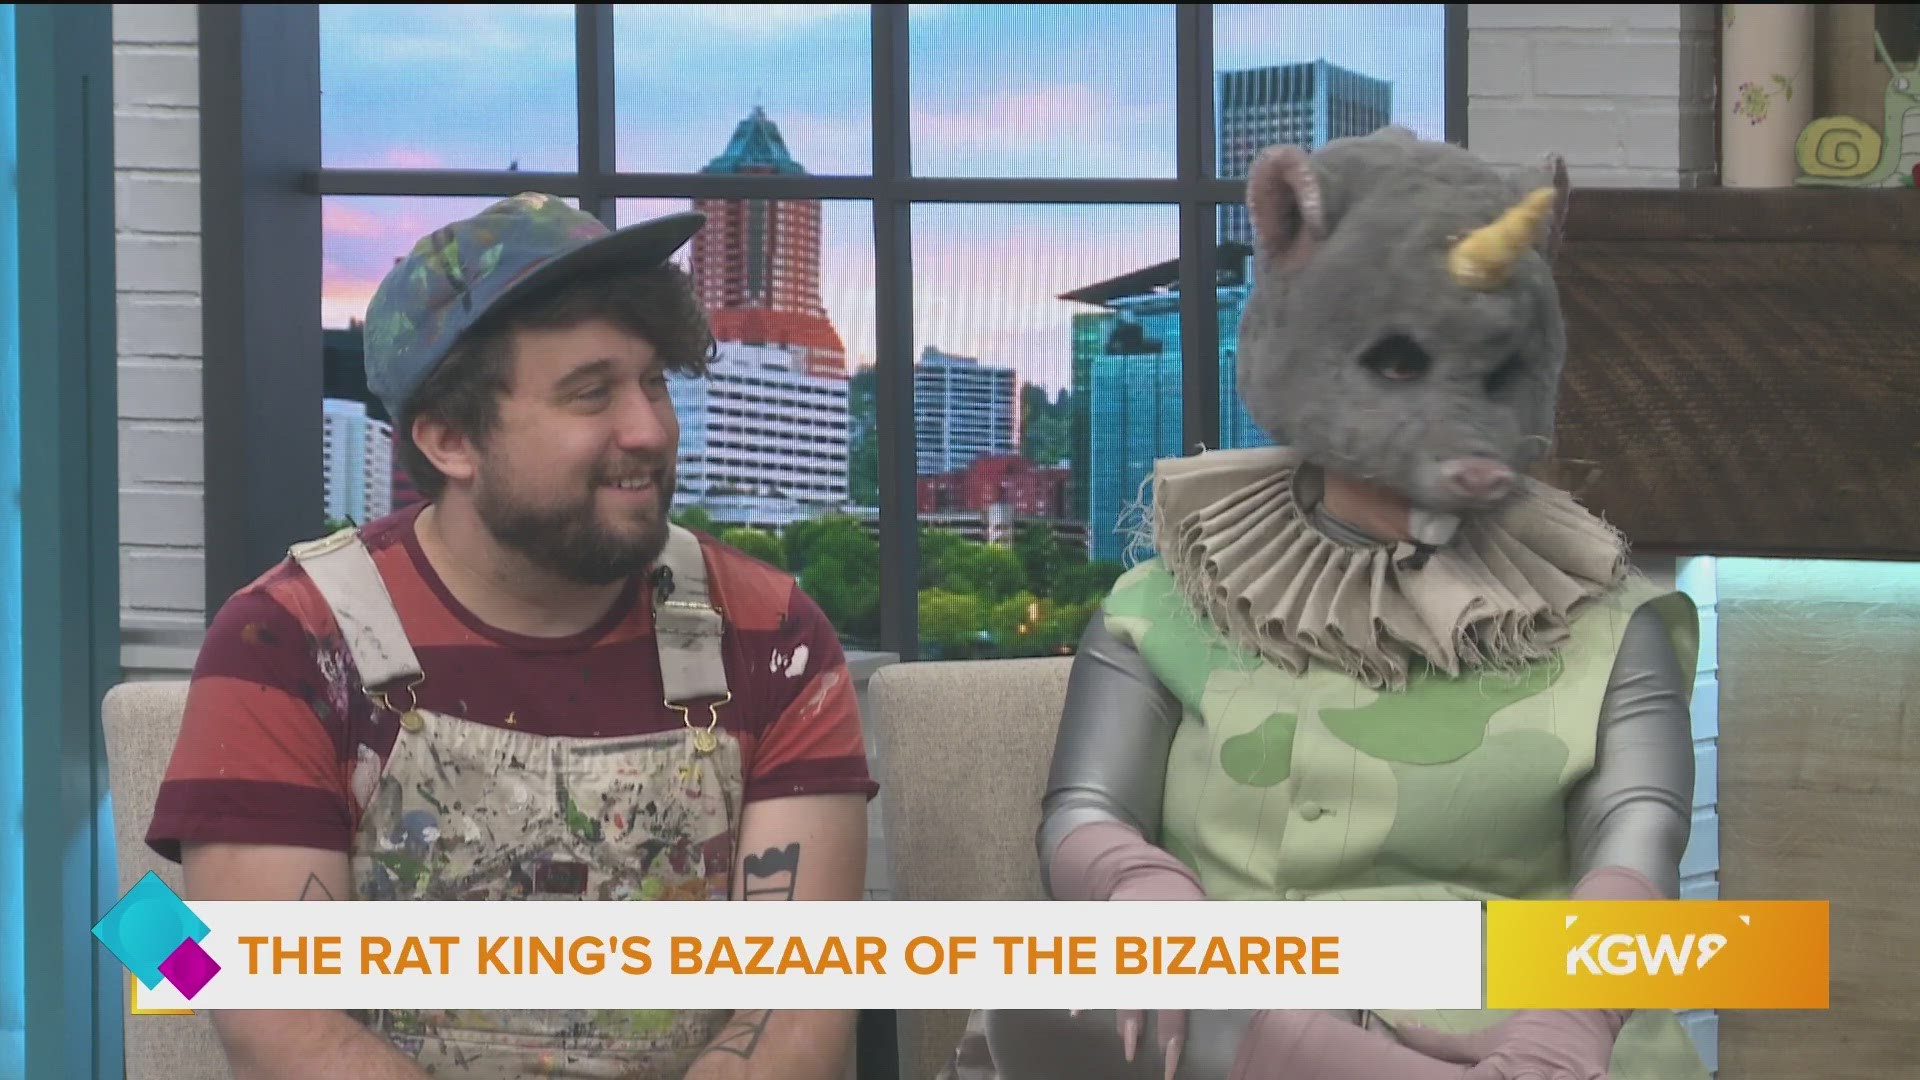 Bennett's new immersive experience is The Rat King's Bazaar of the Bizarre